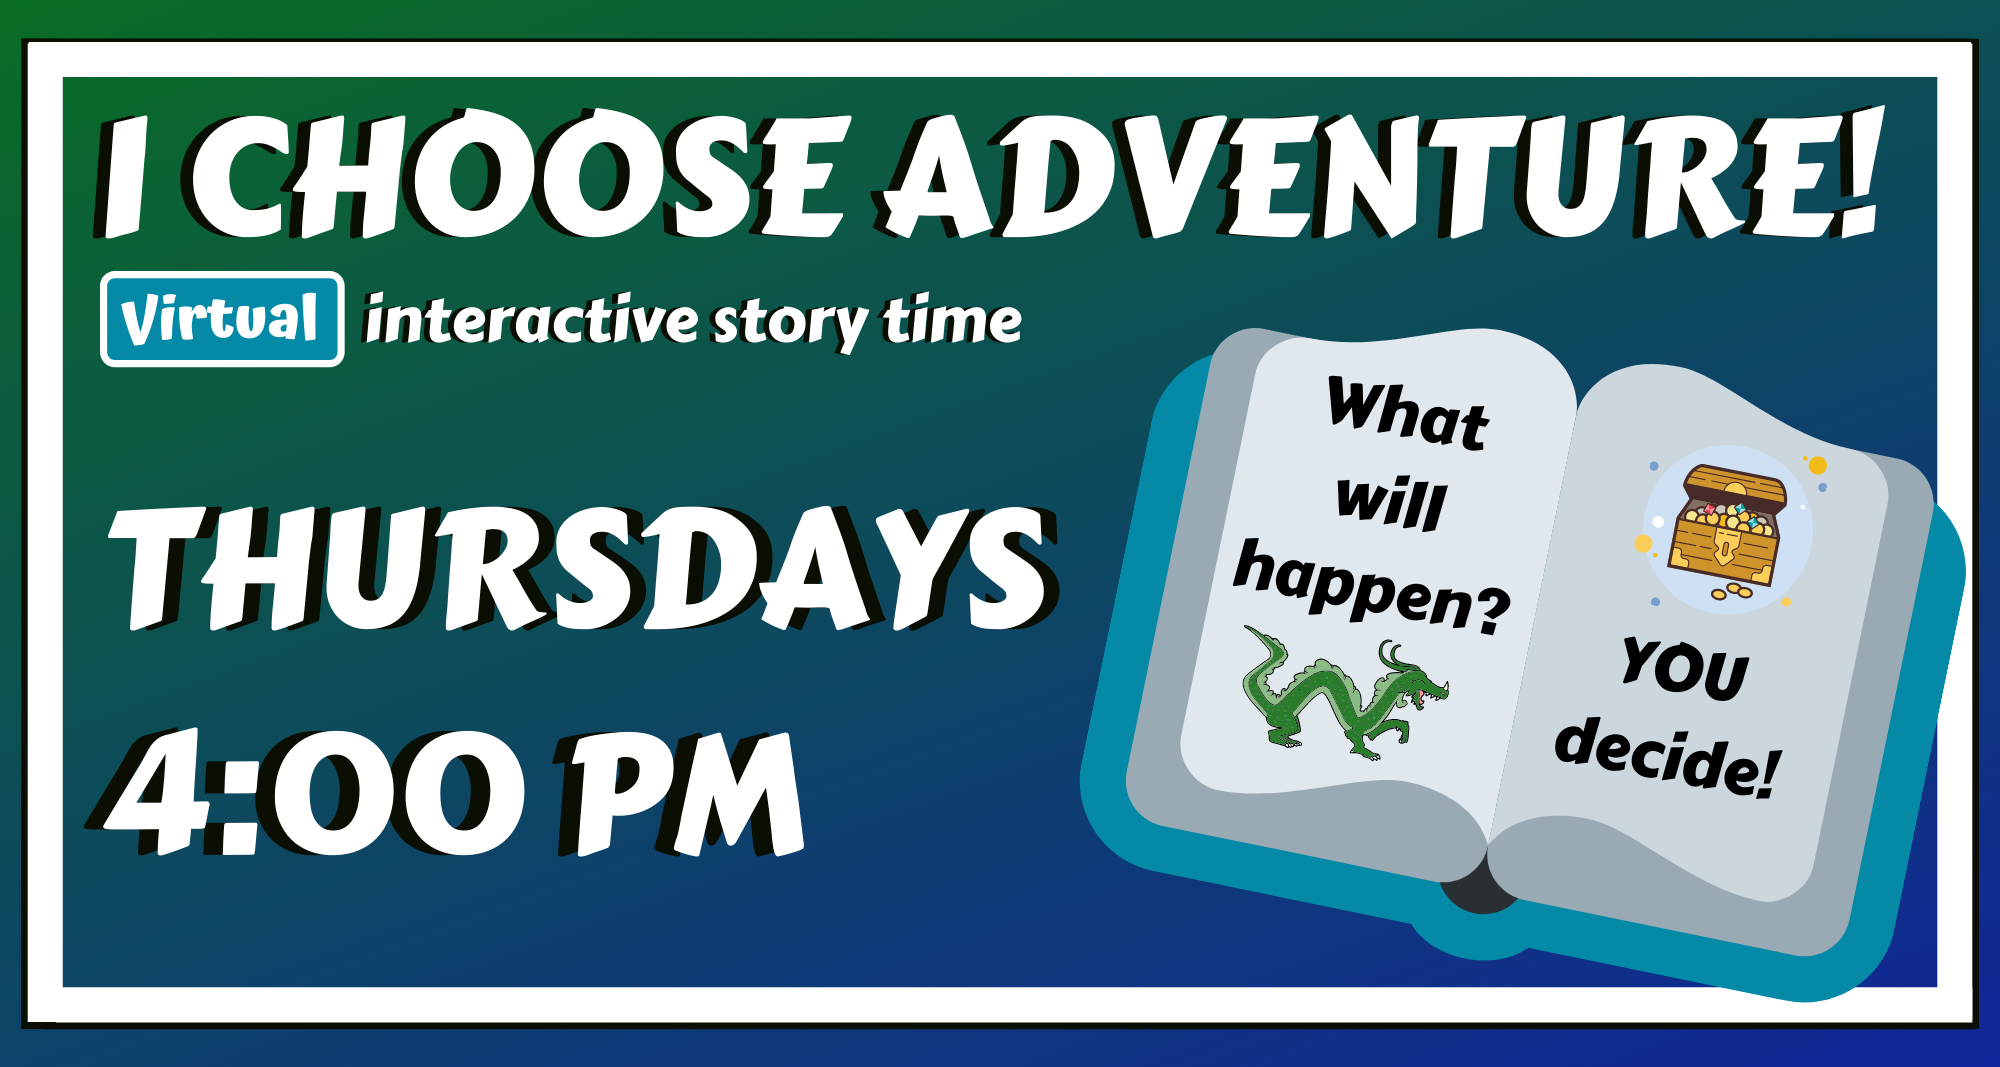 I Choose Adventure! Virtual Interactive Story Time